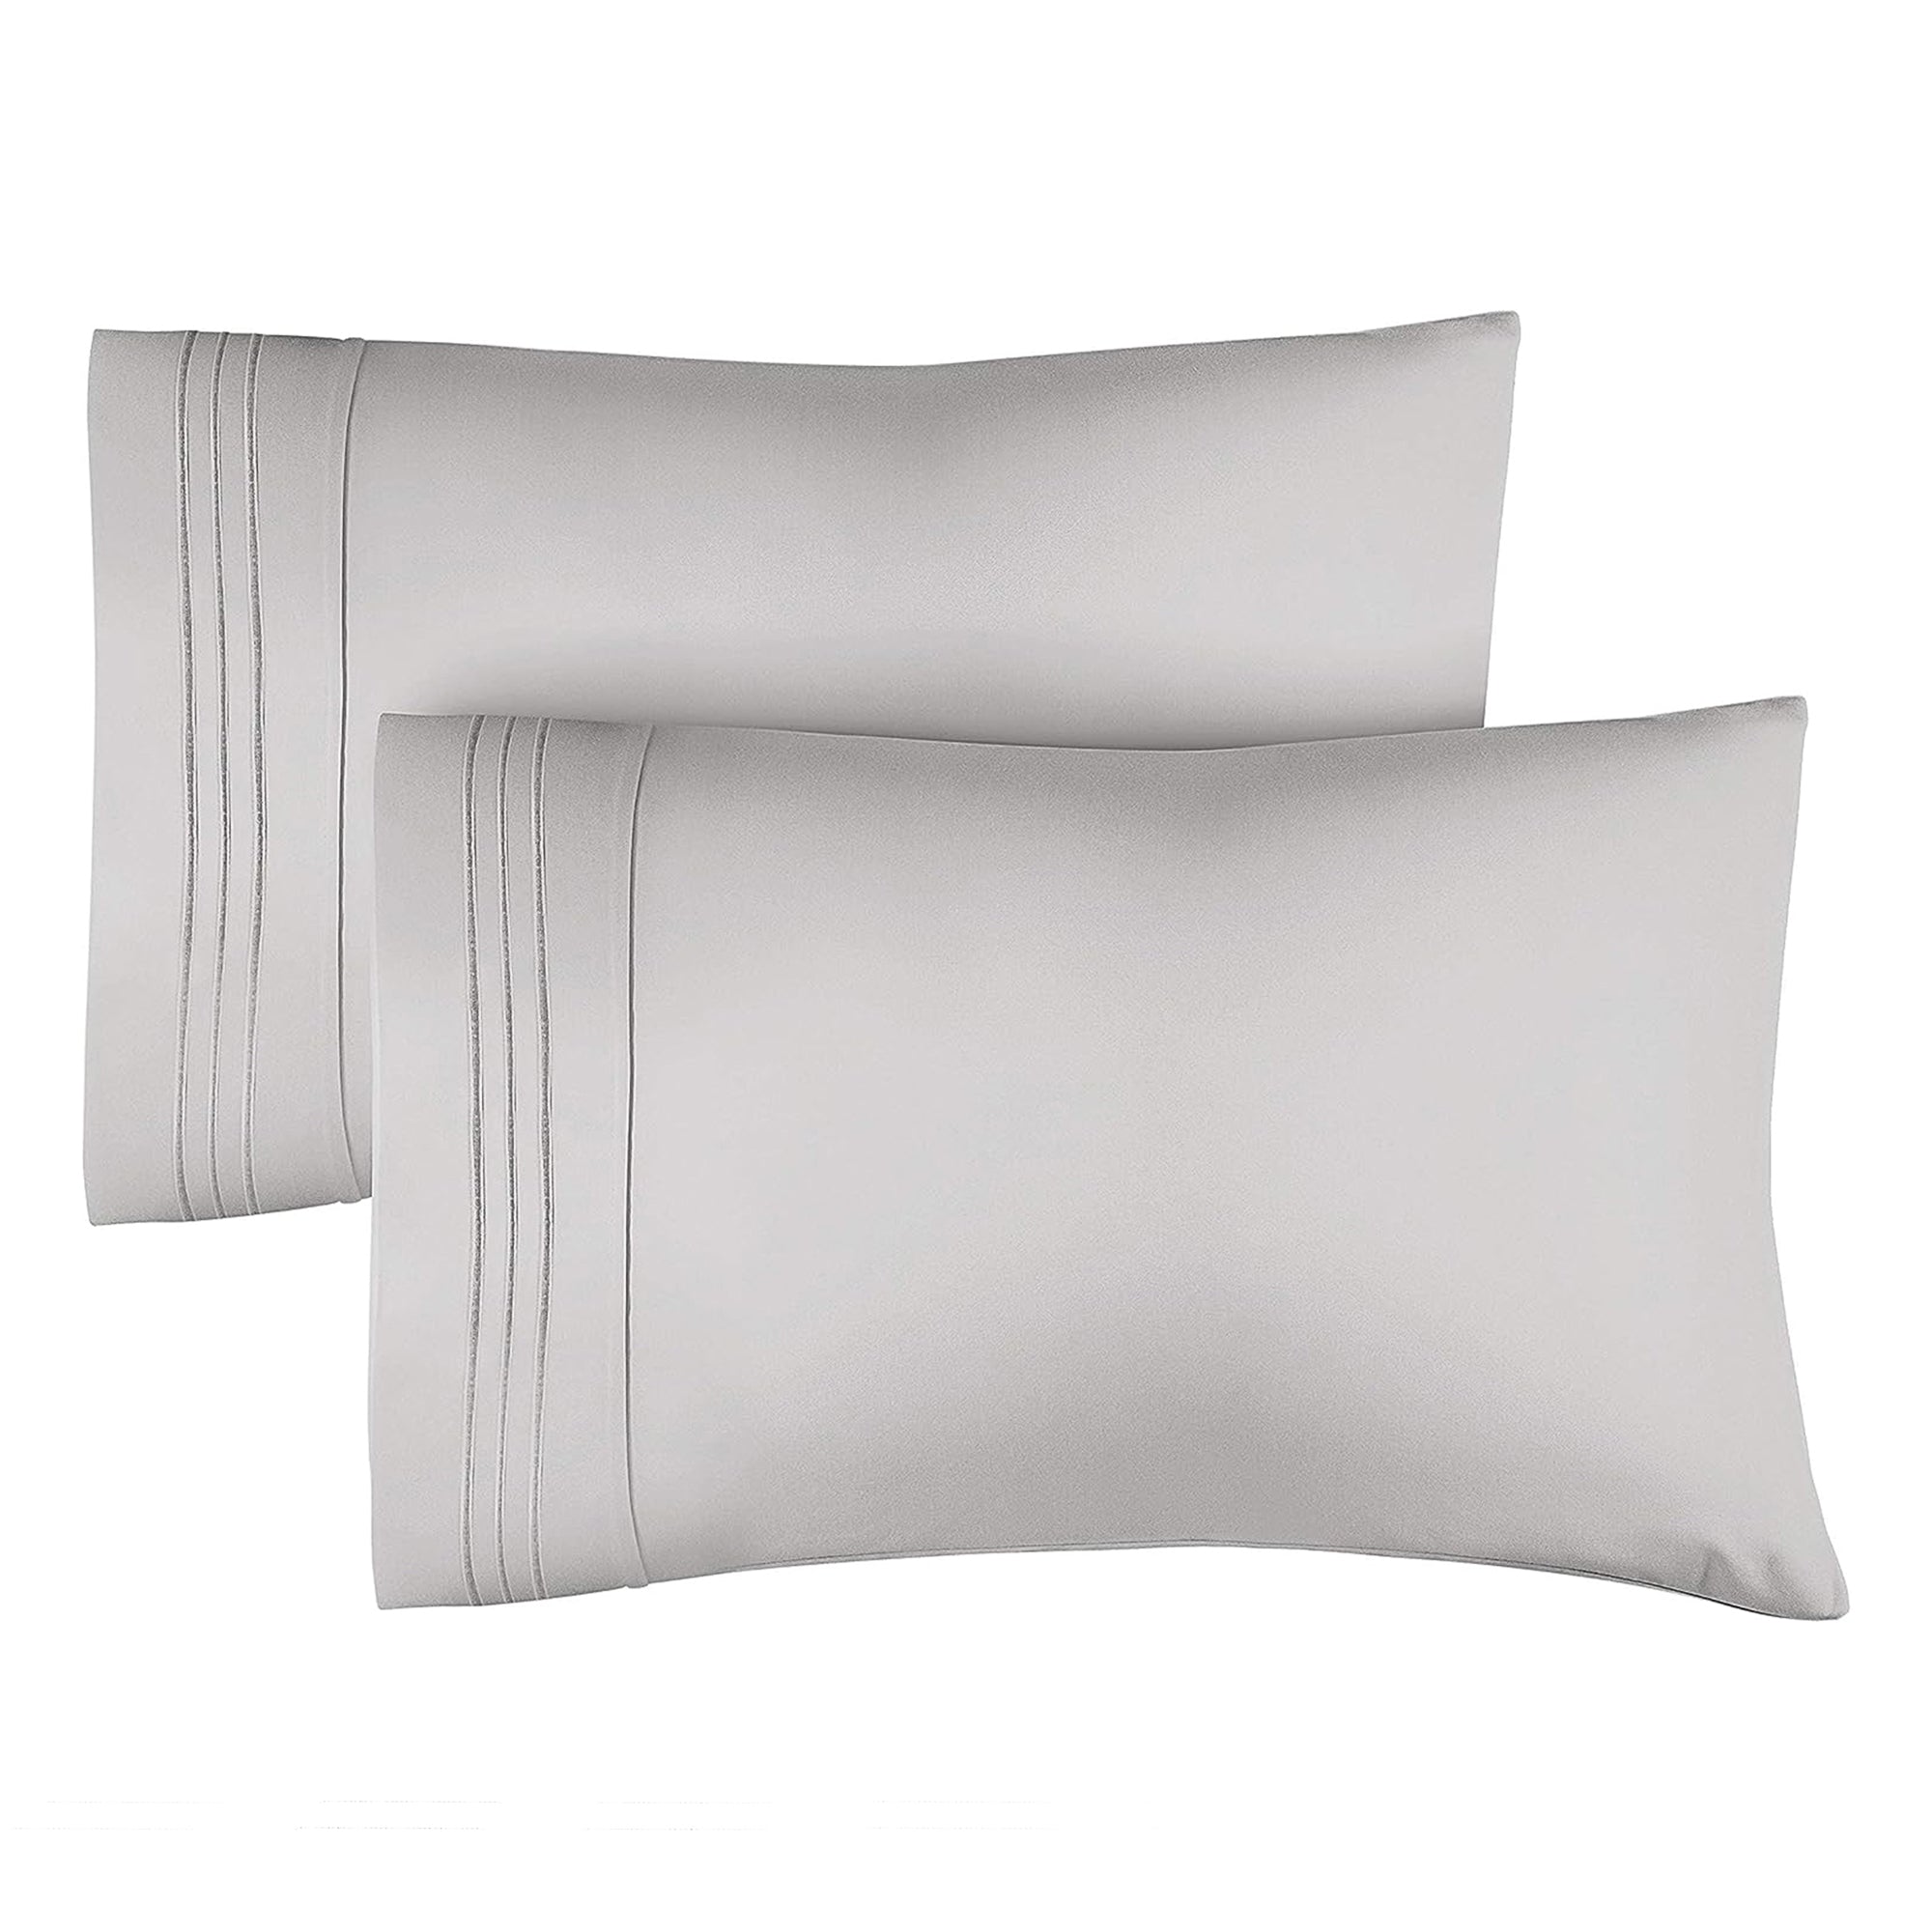 2 Pillowcase Set - Light Grey